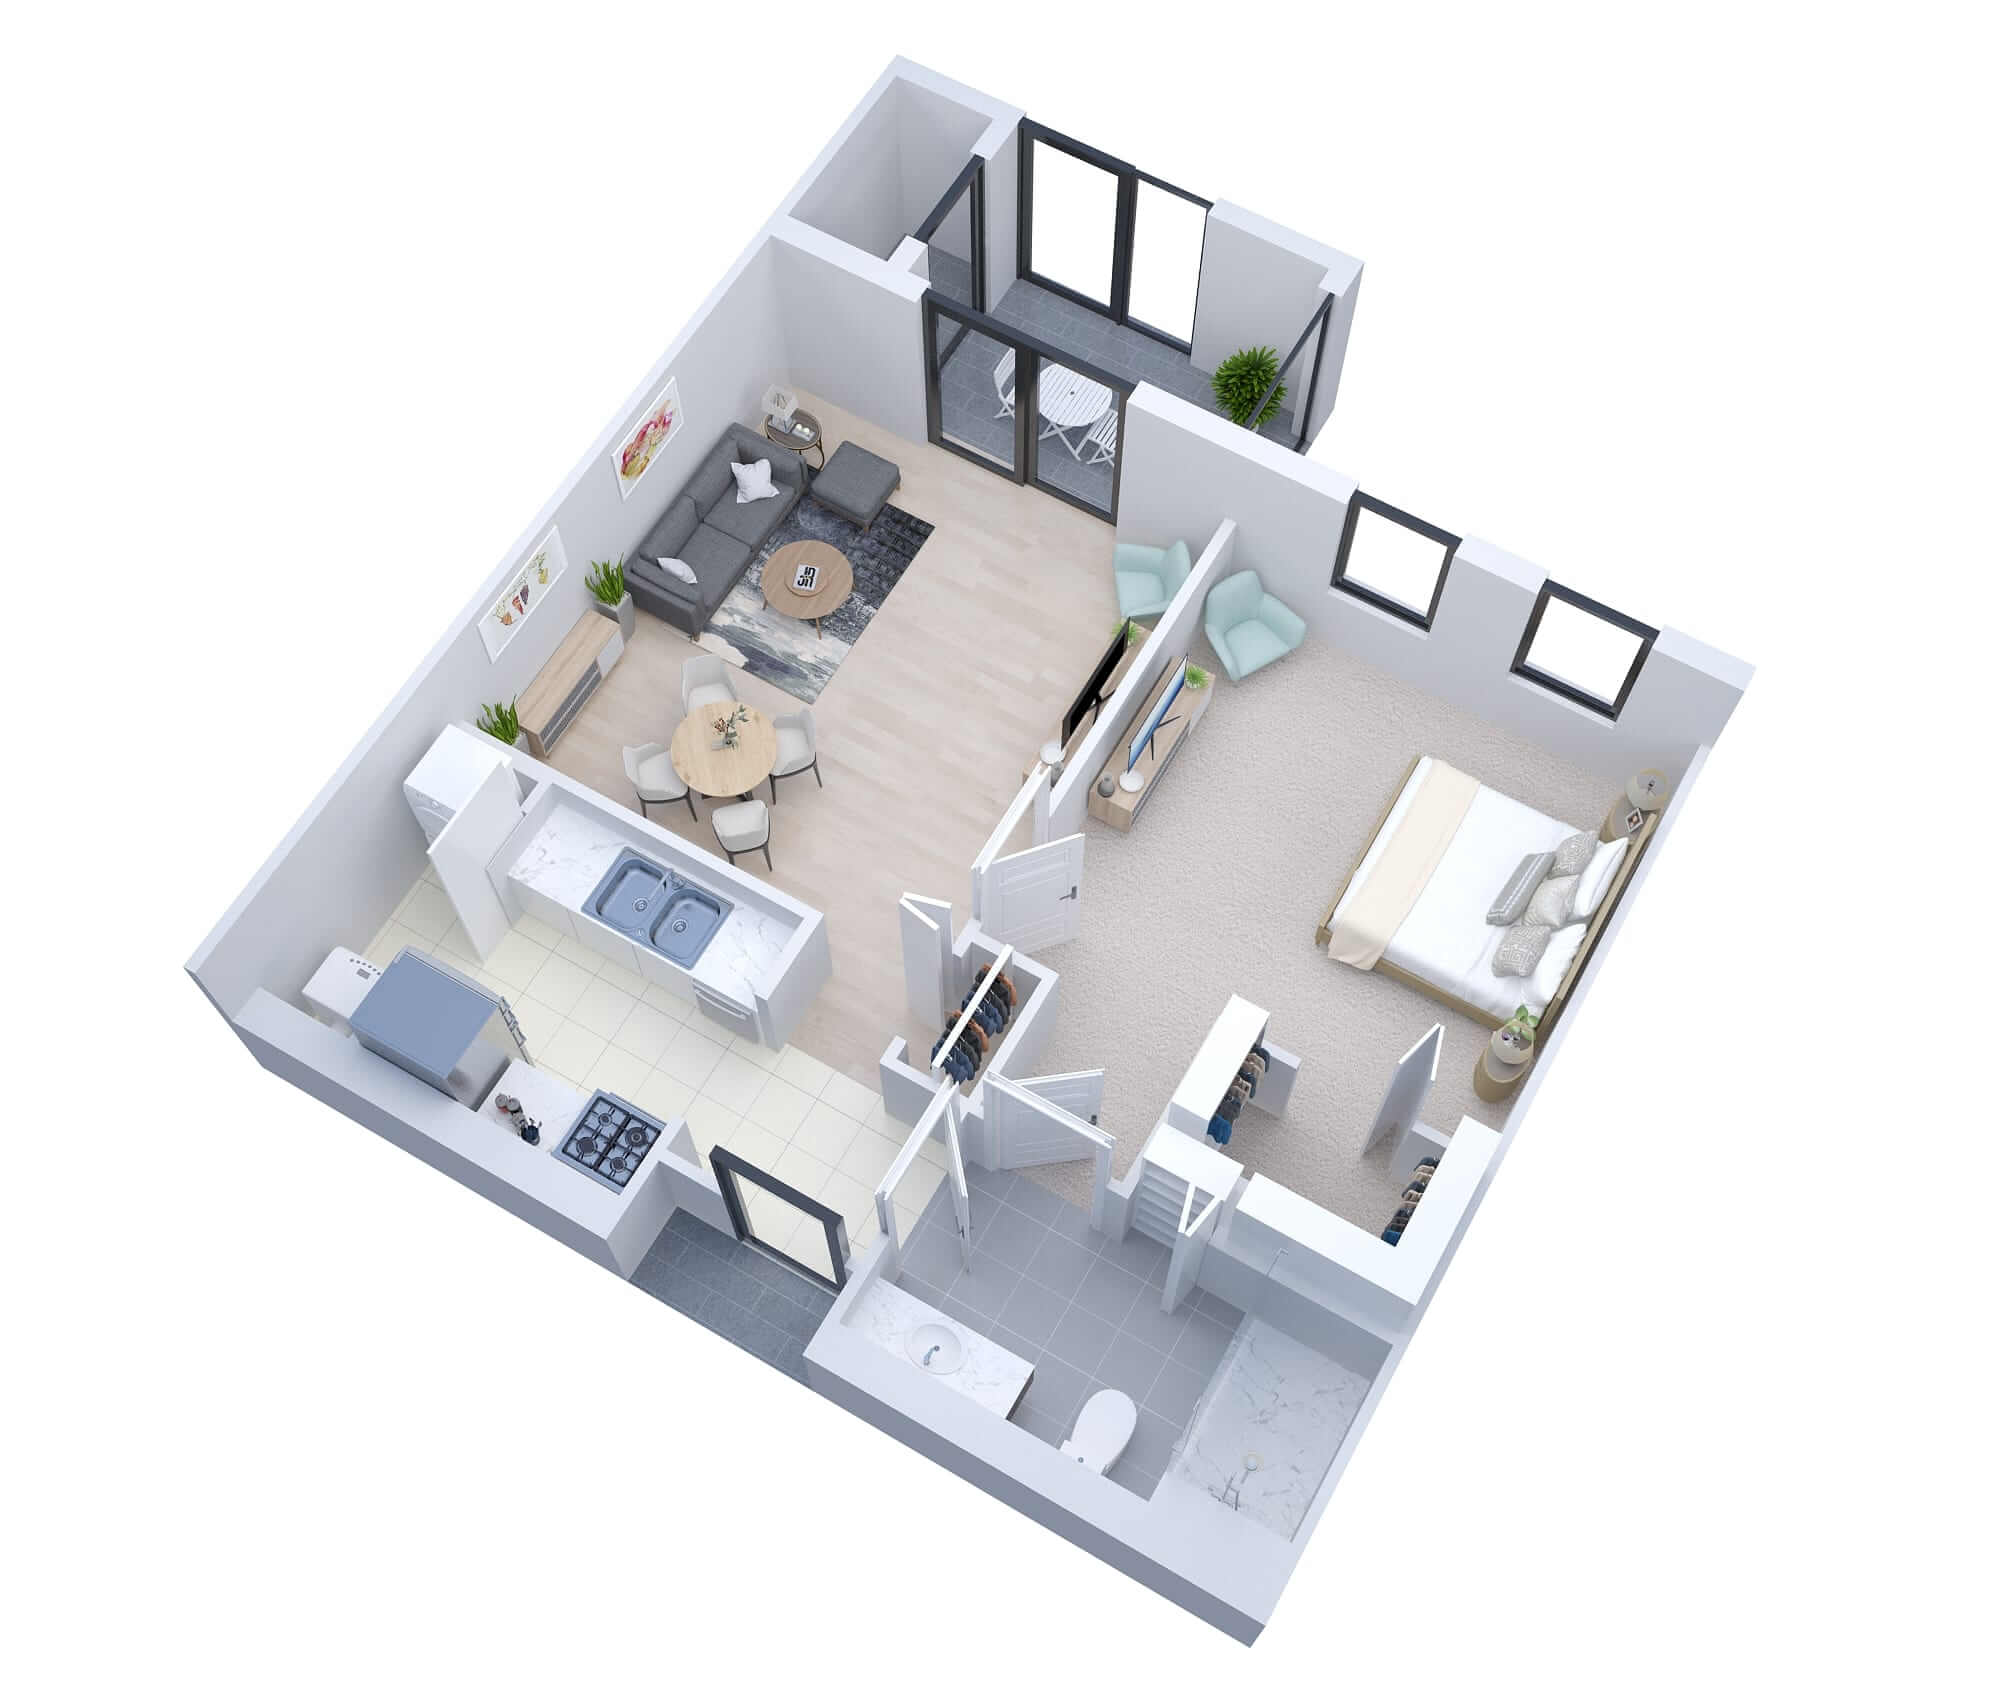 Covington - senior living floor plan